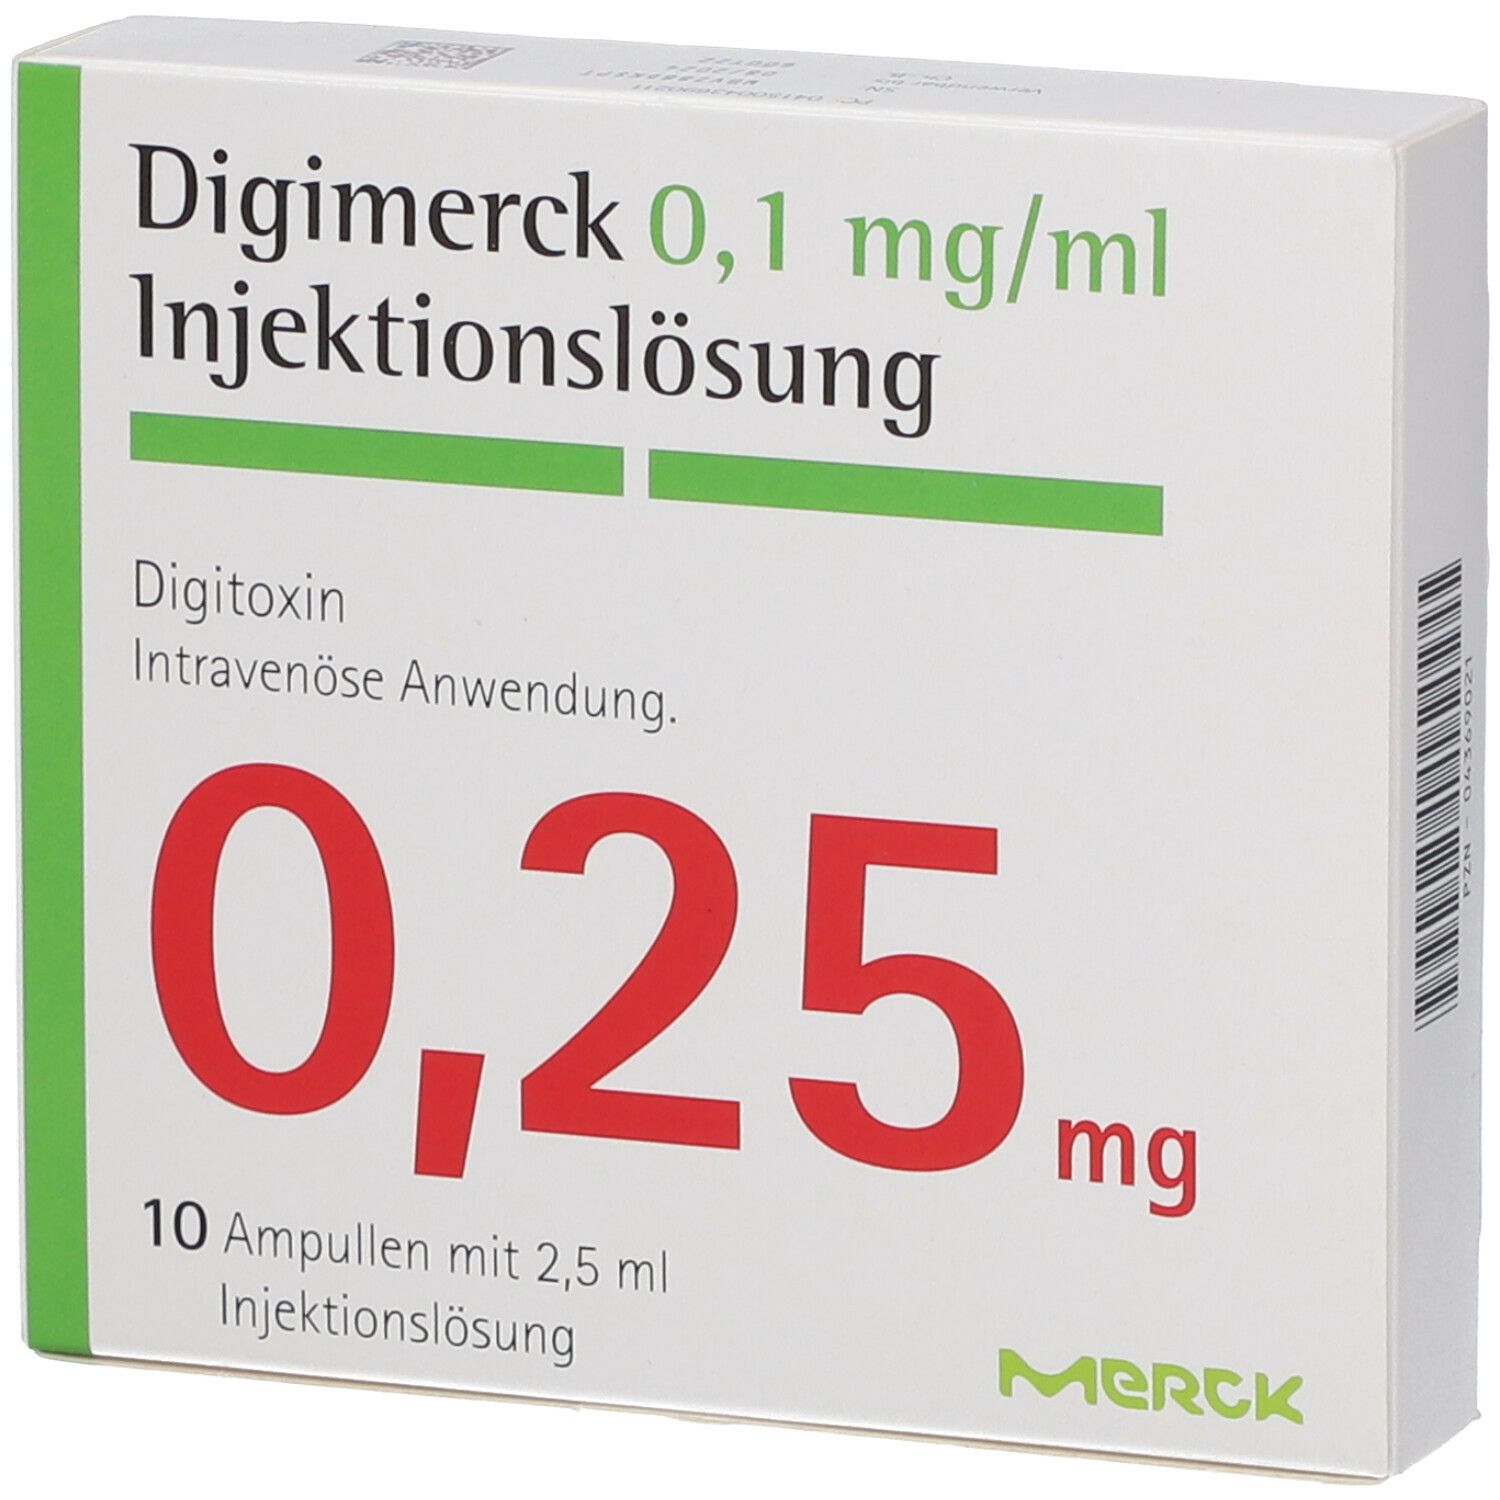 Digimerck® 0,1 mg/ml